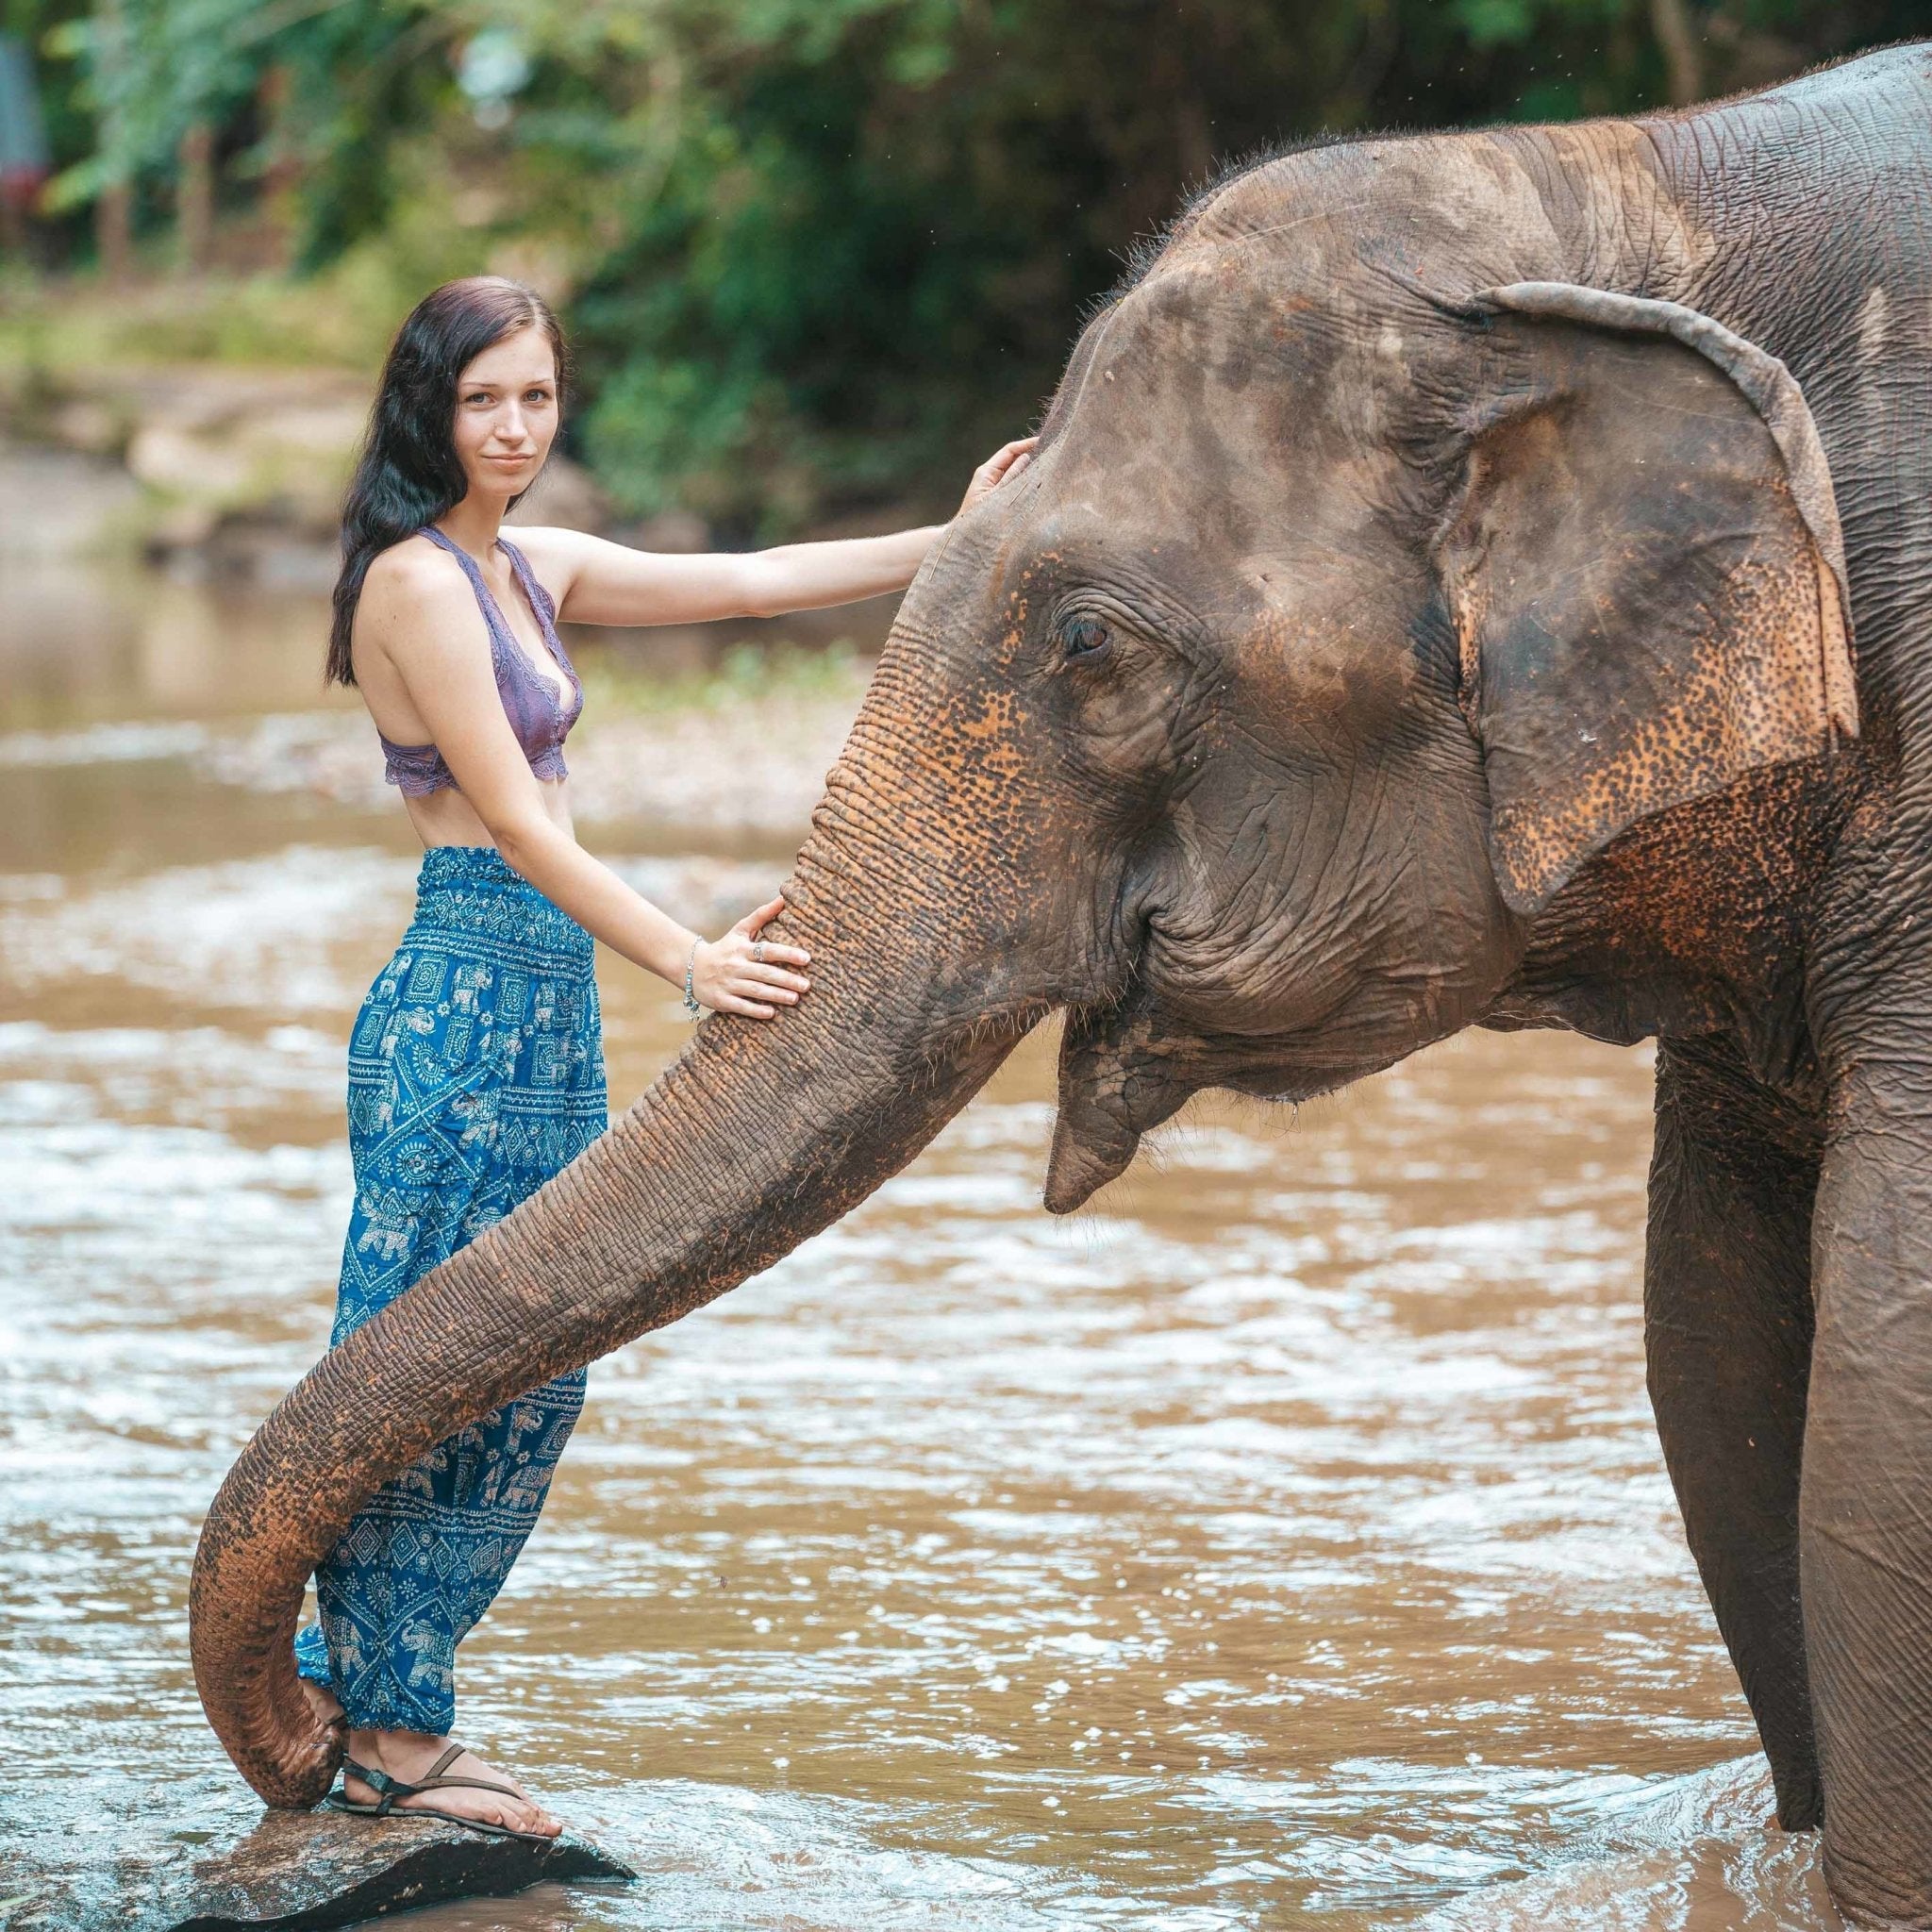 AGRA PANTS - Elastic Waist Elepanta Elastic Waist Pants - Buy Today Elephant Pants Jewelry And Bohemian Clothes Handmade In Thailand Help To Save The Elephants FairTrade And Vegan